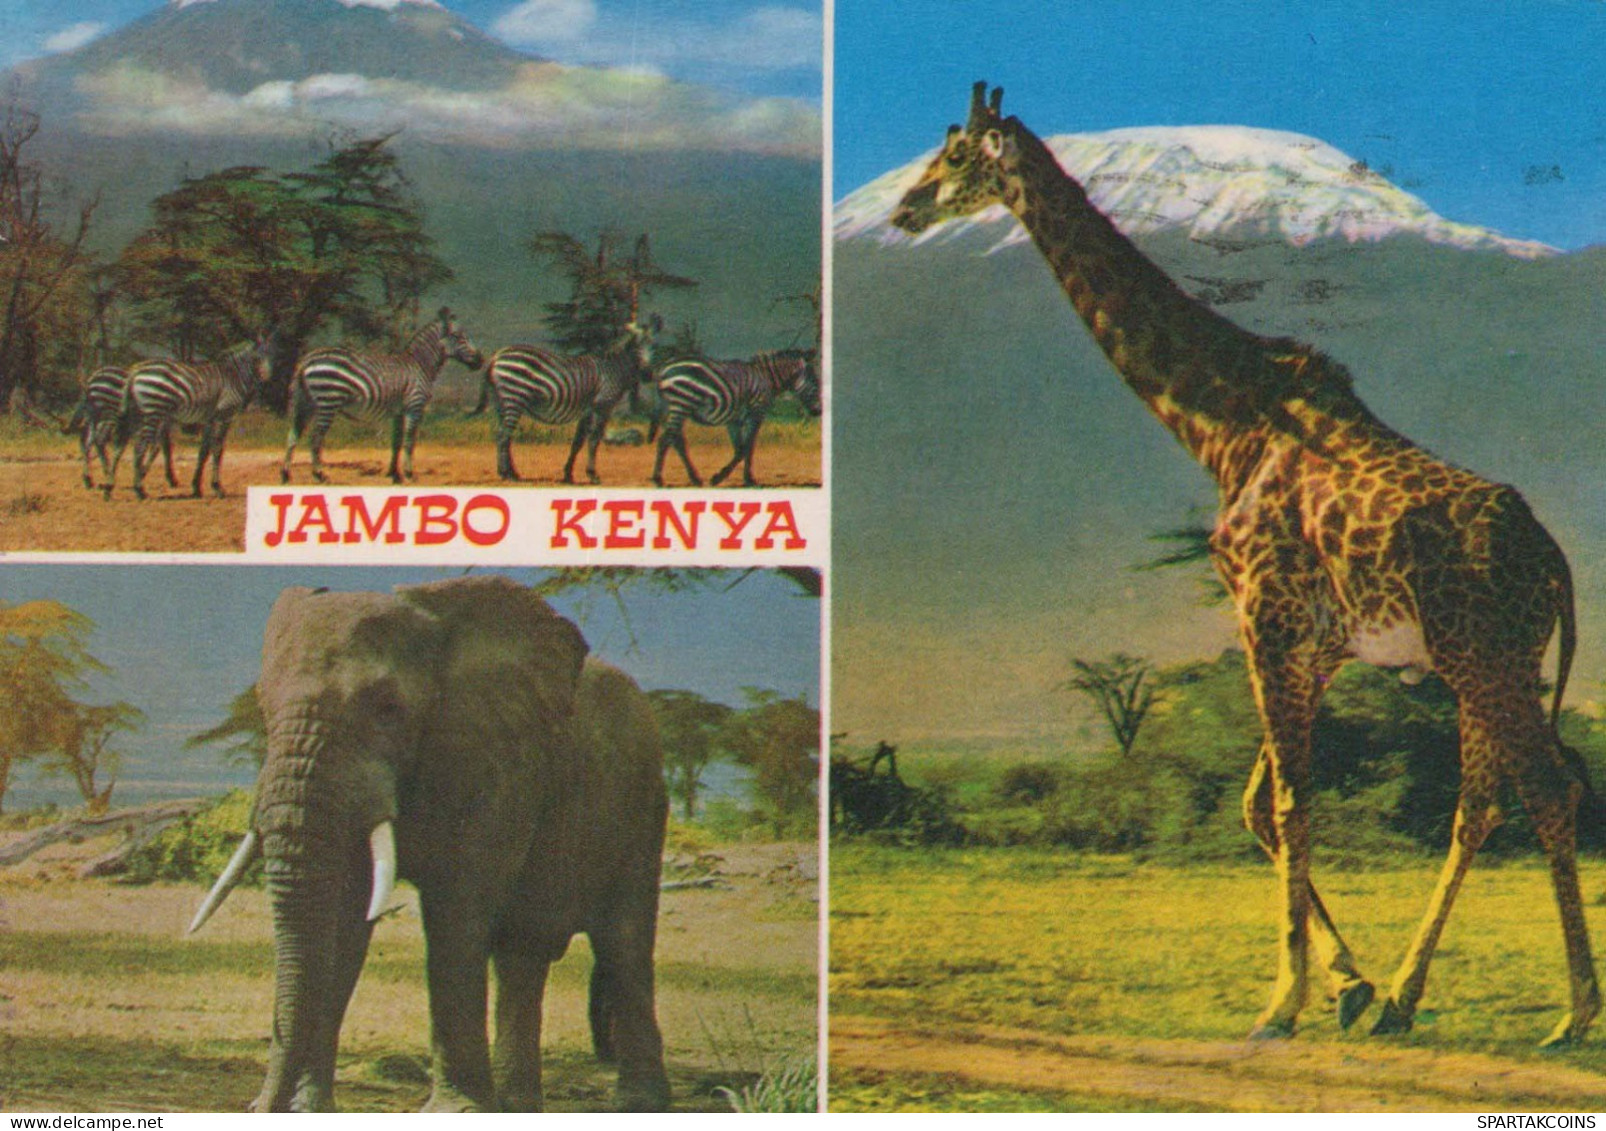 GIRAFFE Tier Vintage Ansichtskarte Postkarte CPSM #PBS949.A - Giraffen